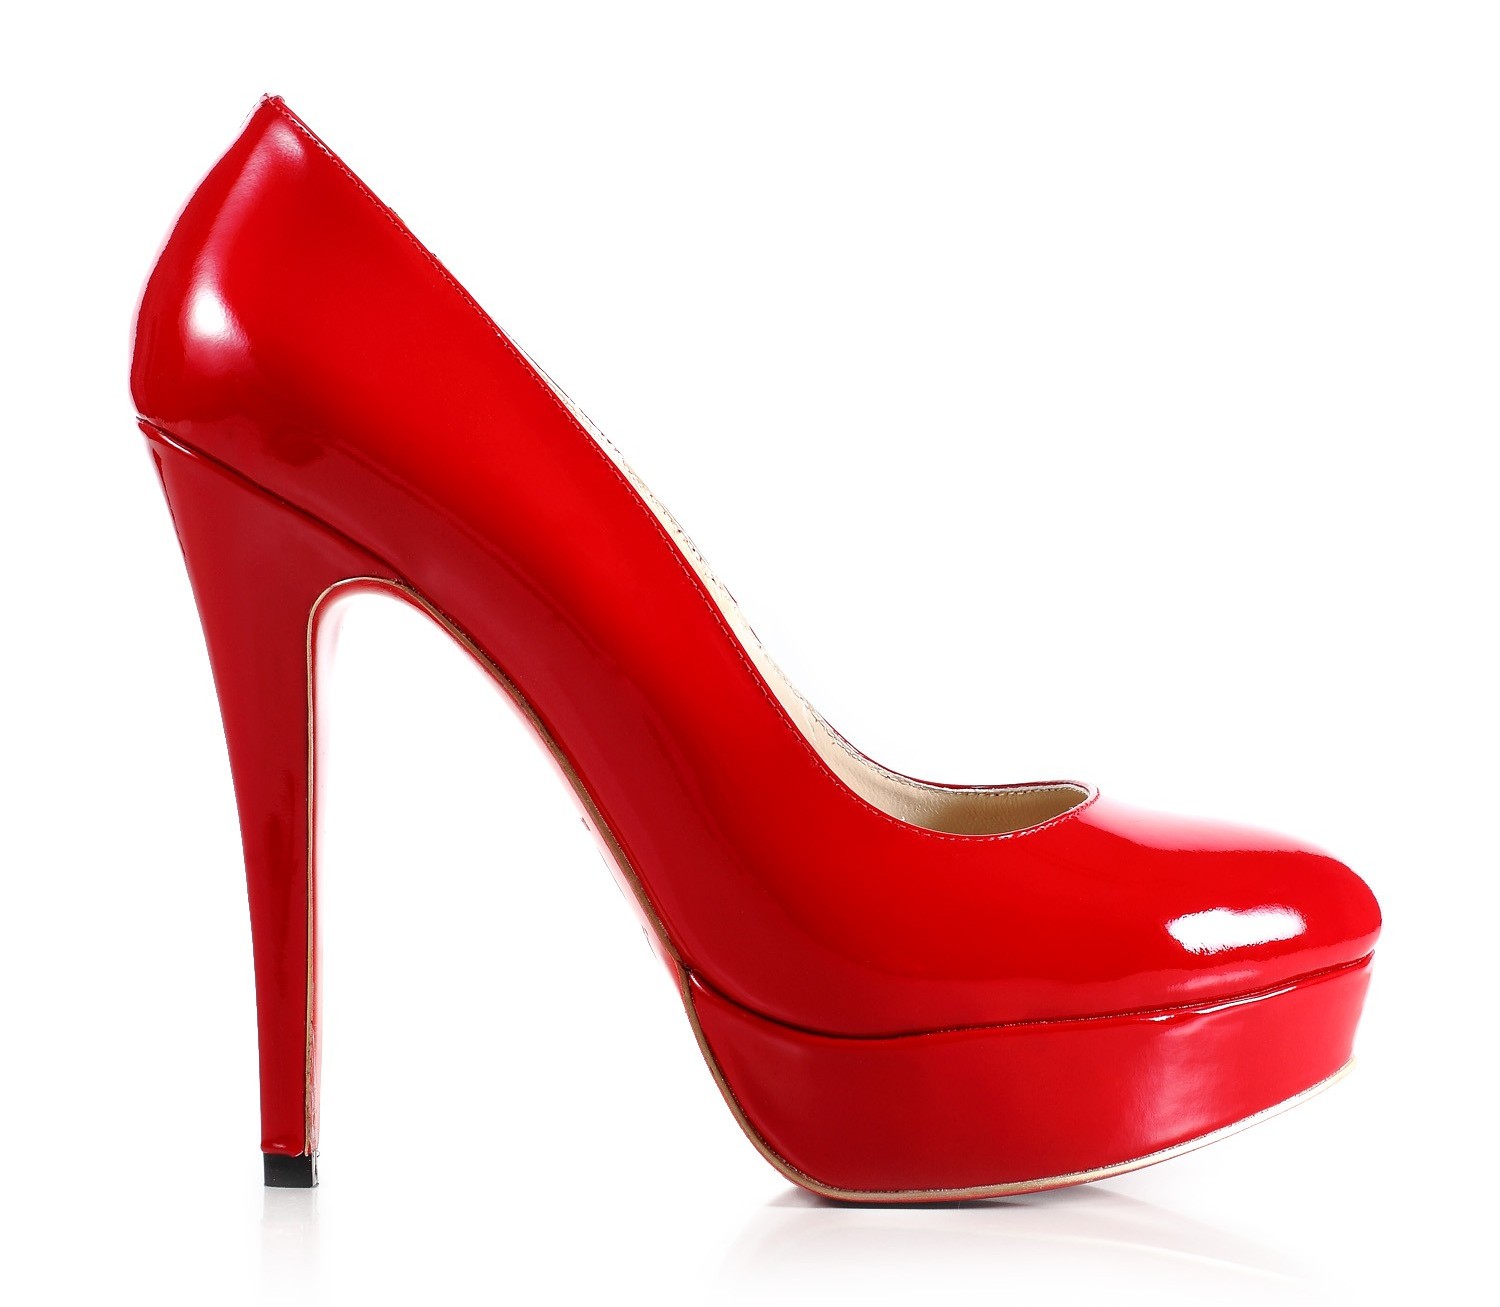 Red Patent Leather Pump High Heel Bikozulu